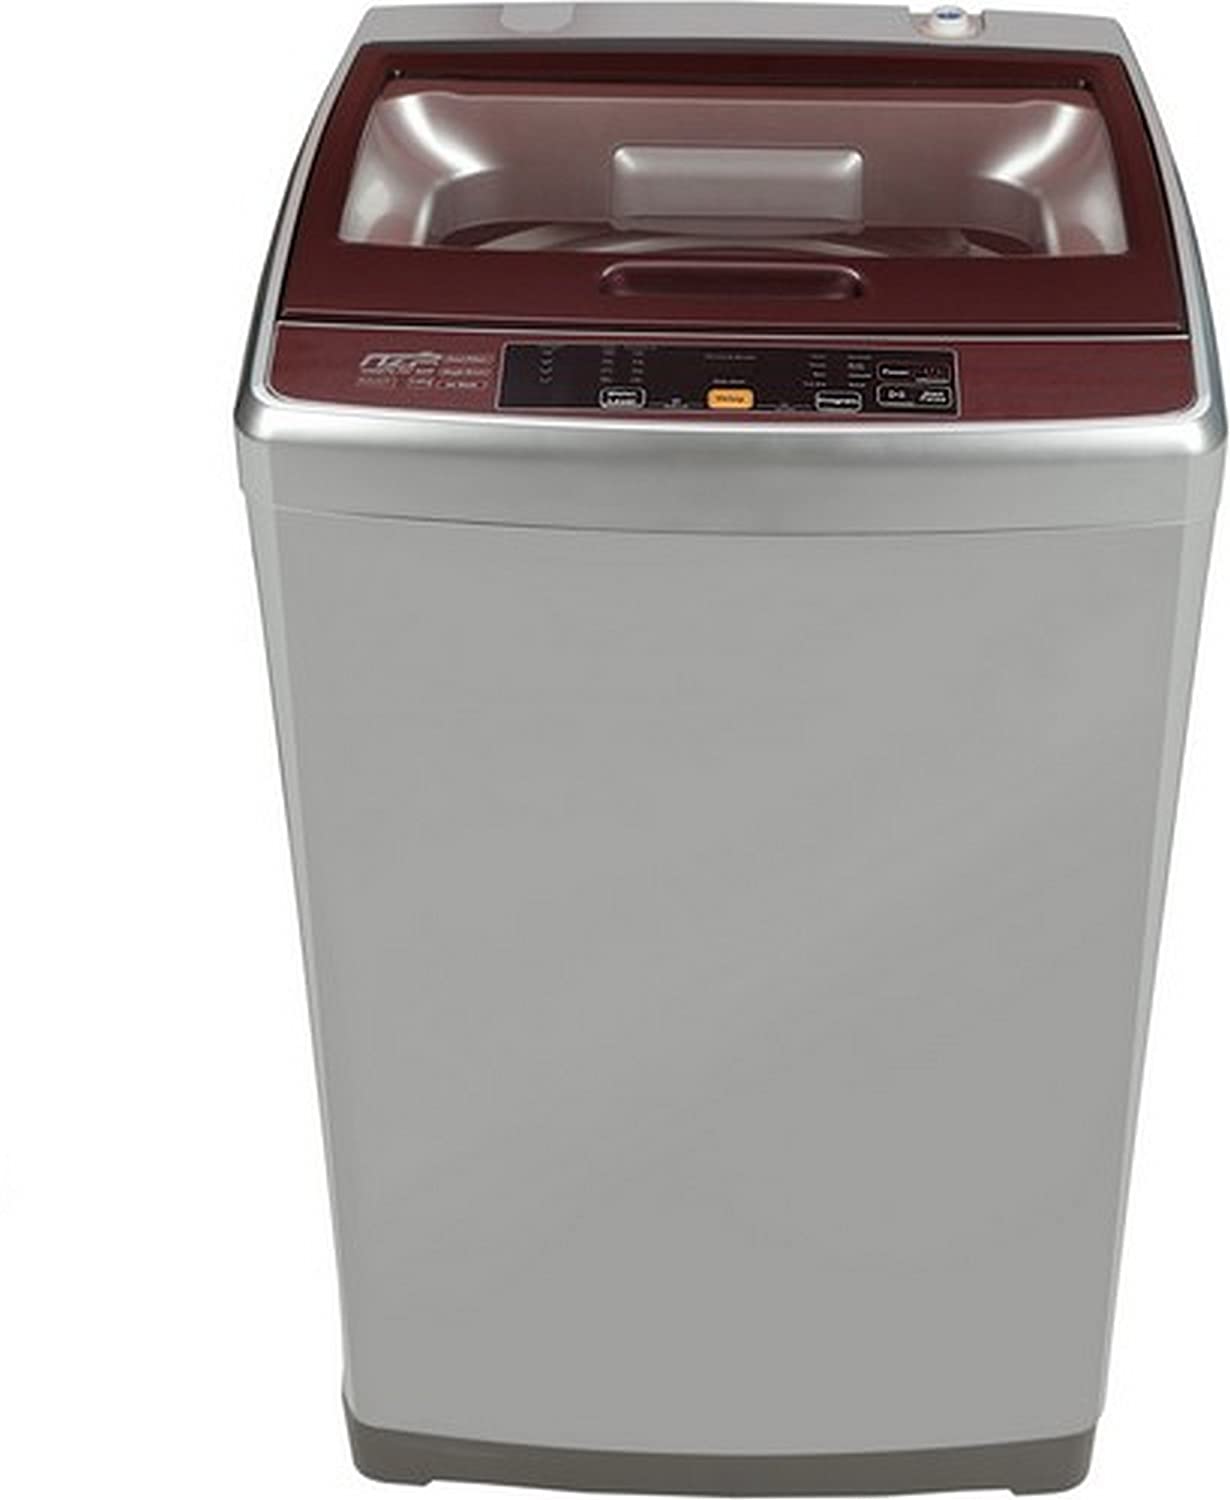 Haier Washing Machine 70-707NZP 6.5 kg